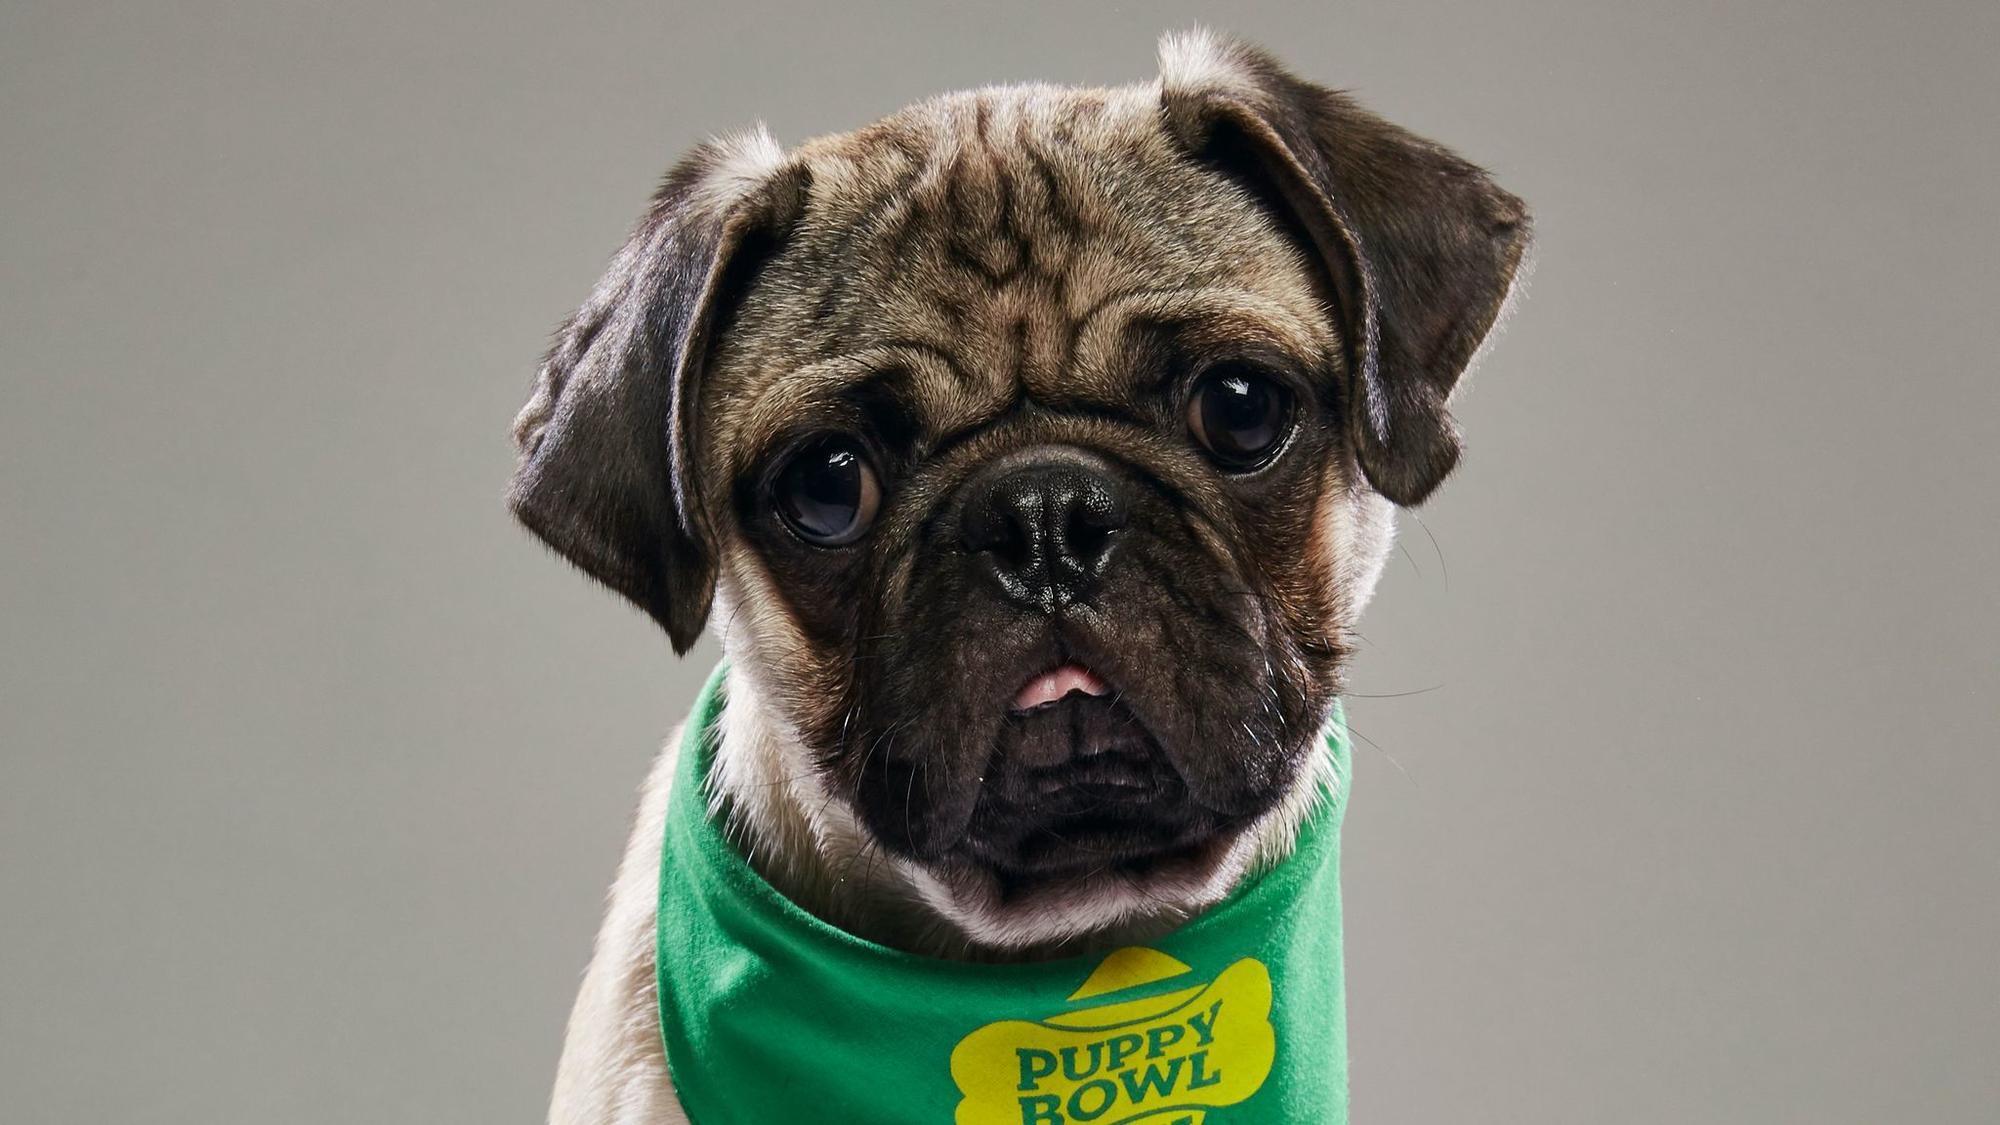 Miami pug to compete in Animal Planet's 'Puppy Bowl' - Sun Sentinel2000 x 1125